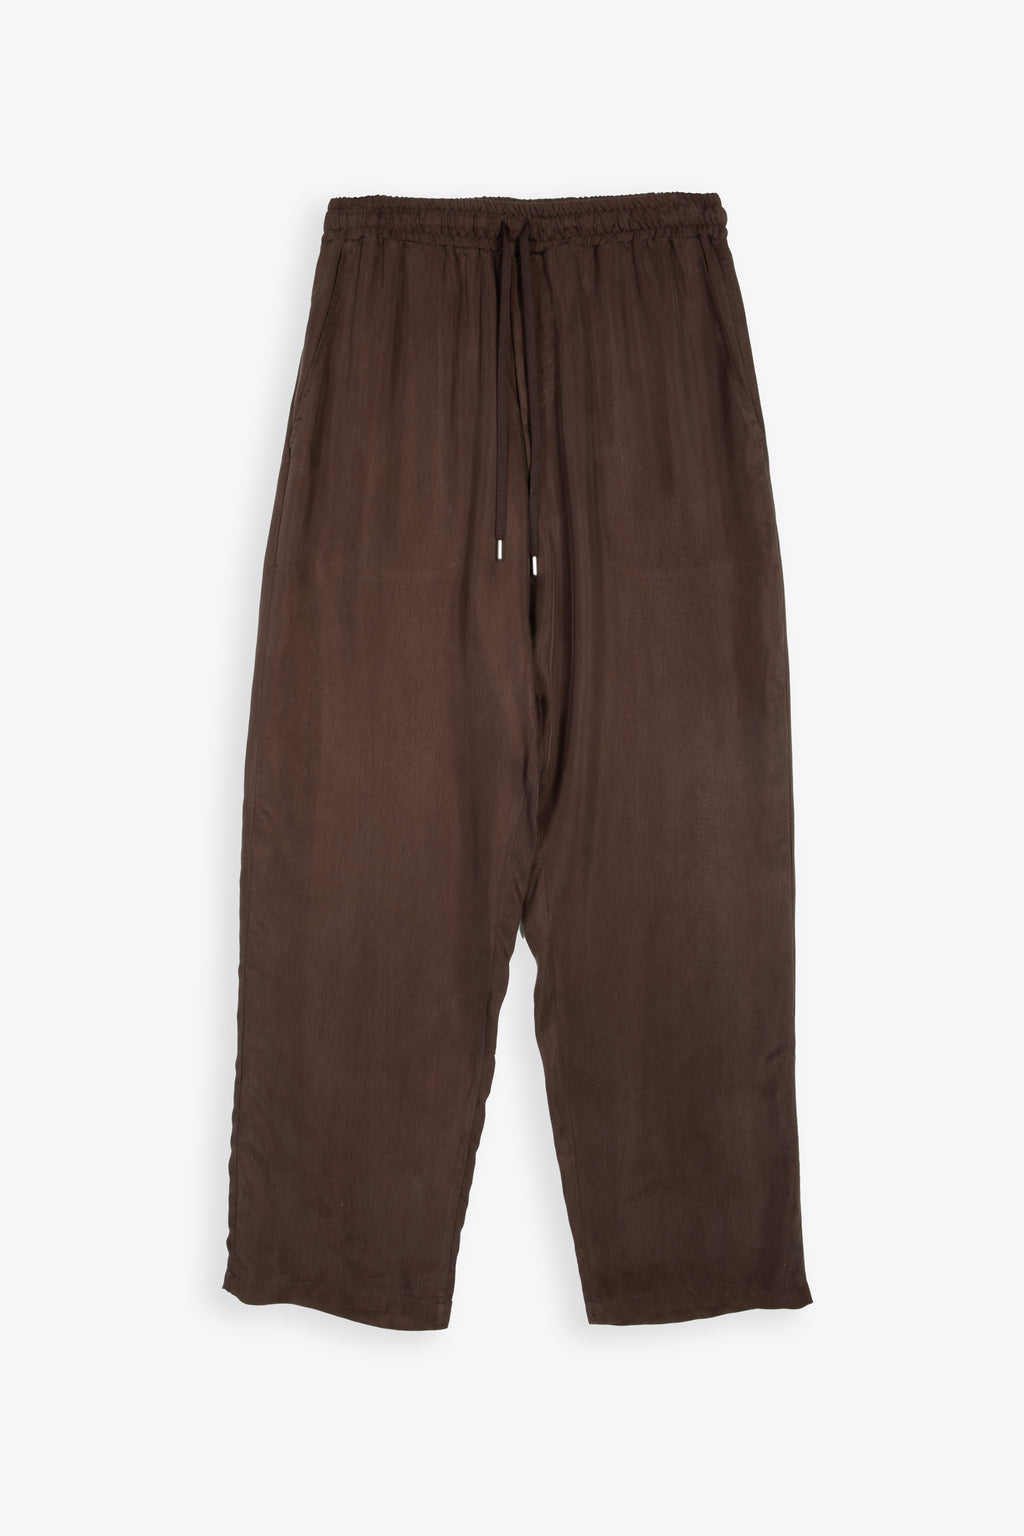 alt-image__Pantalone-ampio-in-cupro-marrone---Pajama-Otaru-Trousers